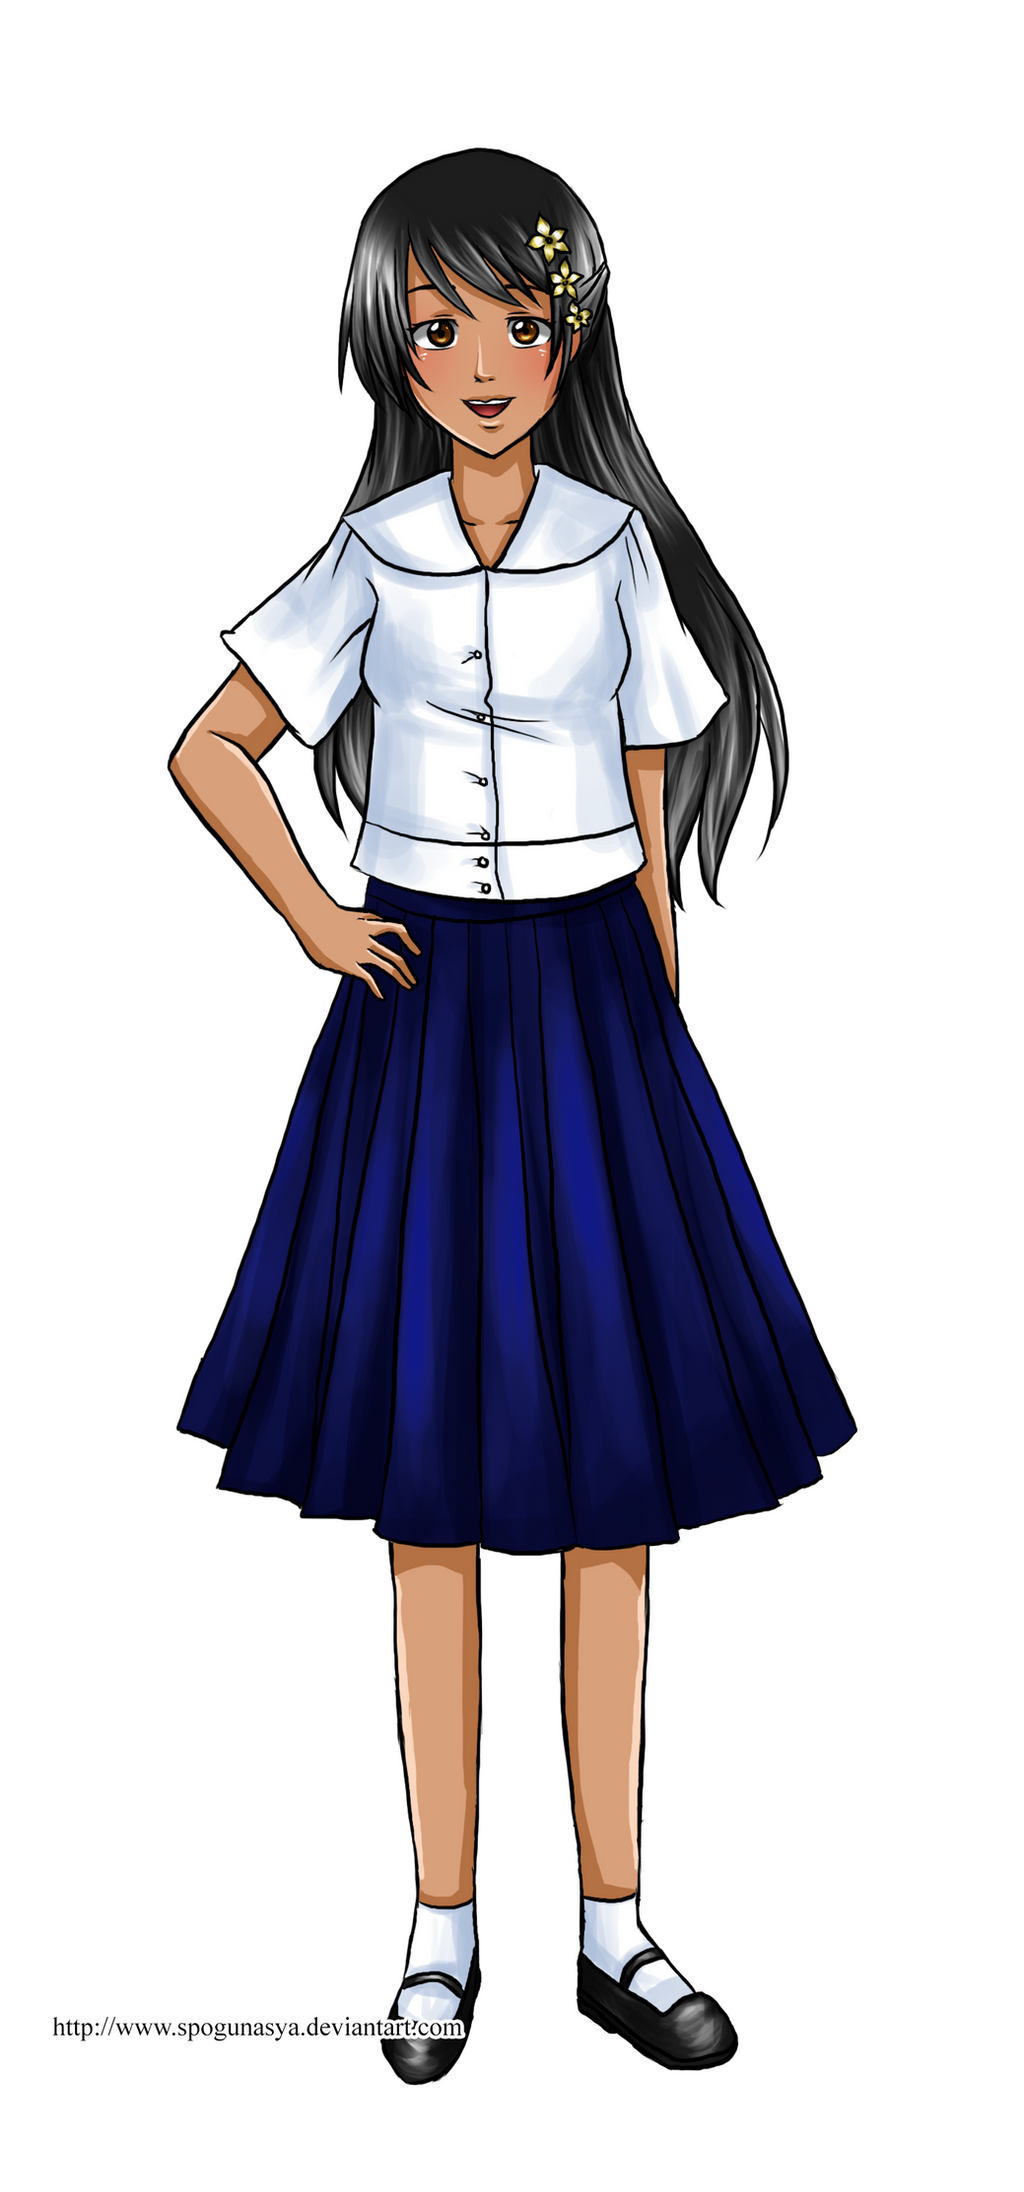 clipart girl in school uniform - photo #49